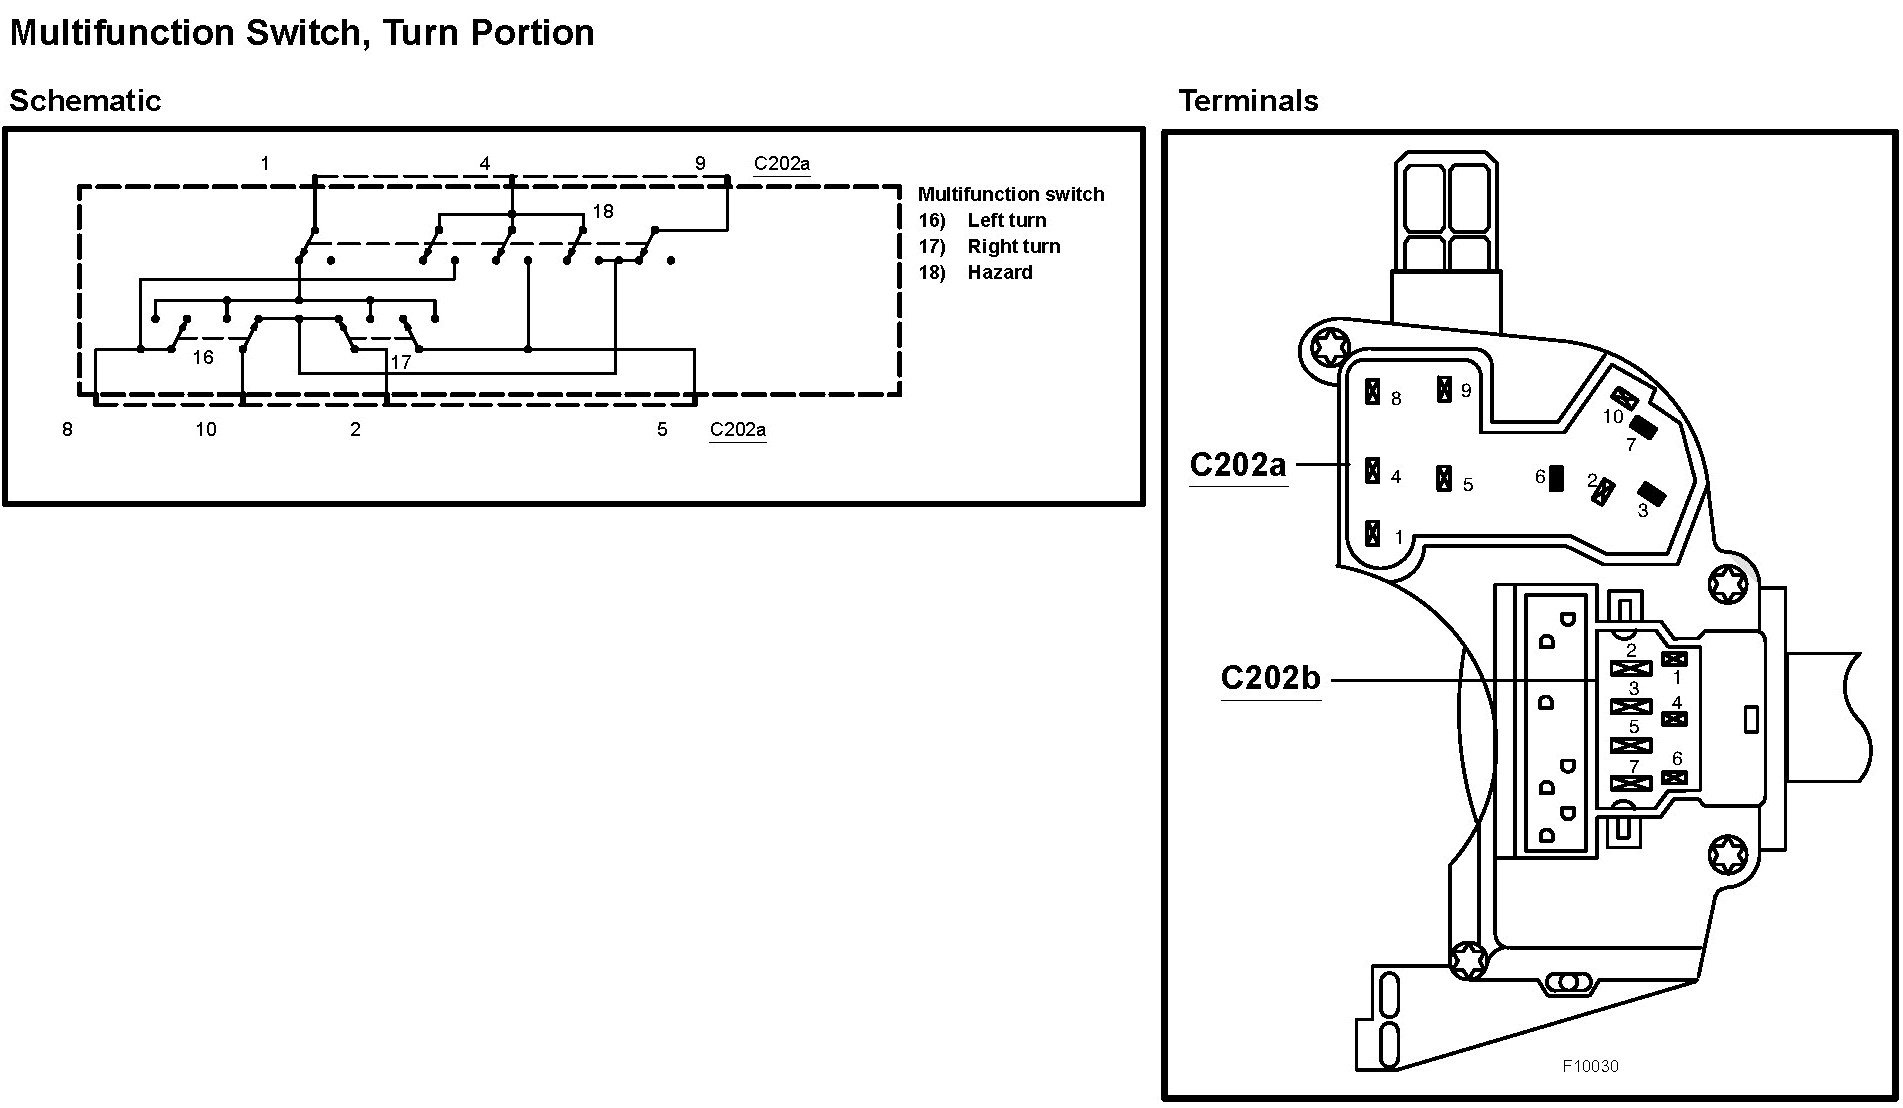 Multifunction Switch Wiring Diagram